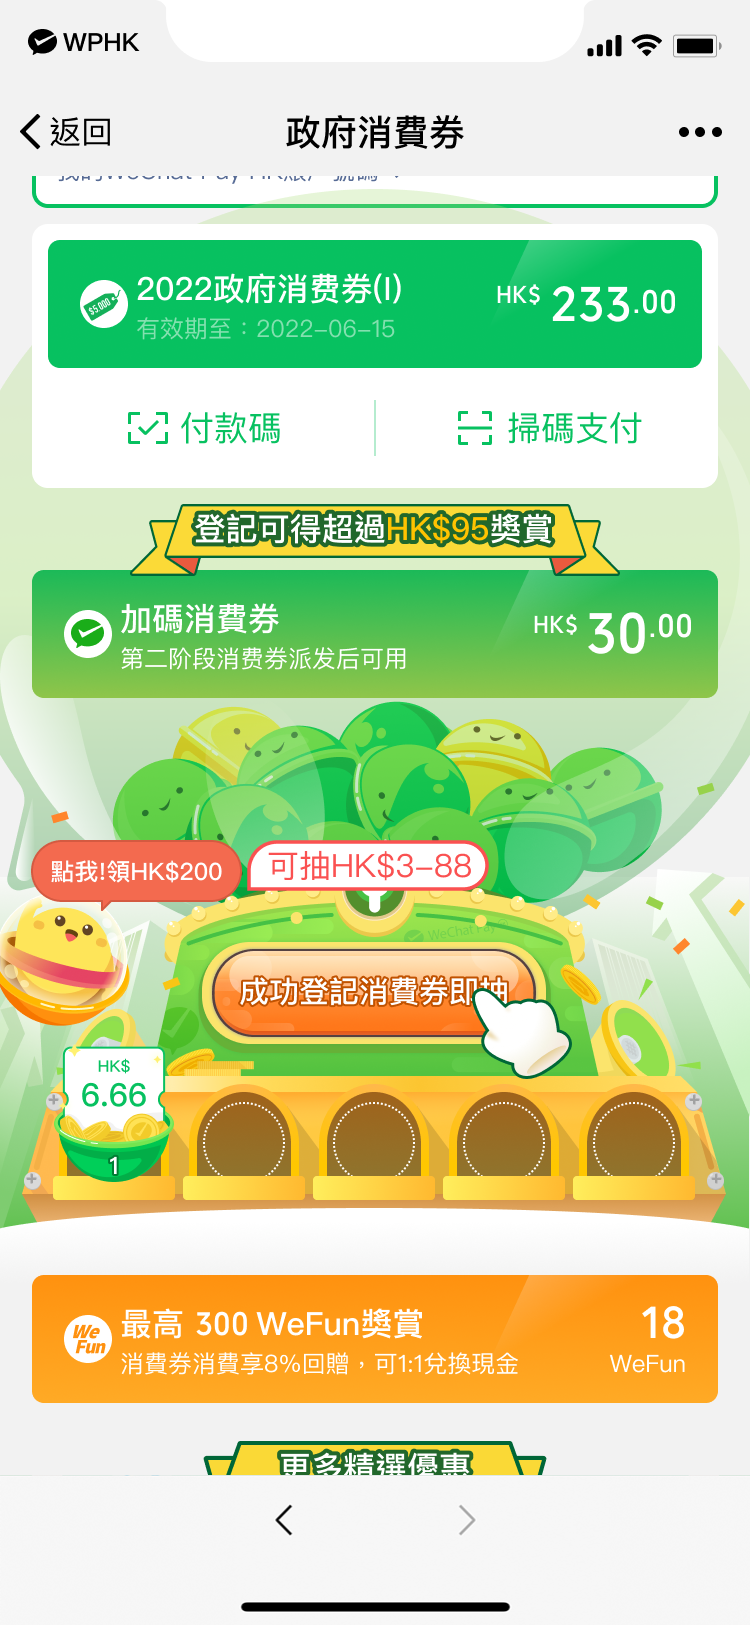 【WeChat Pay HK x 富融銀行消費券加碼優惠】轉WeChat Pay HK收消費券+綁定富融銀行戶口可獲總值最高HK$630獎賞！